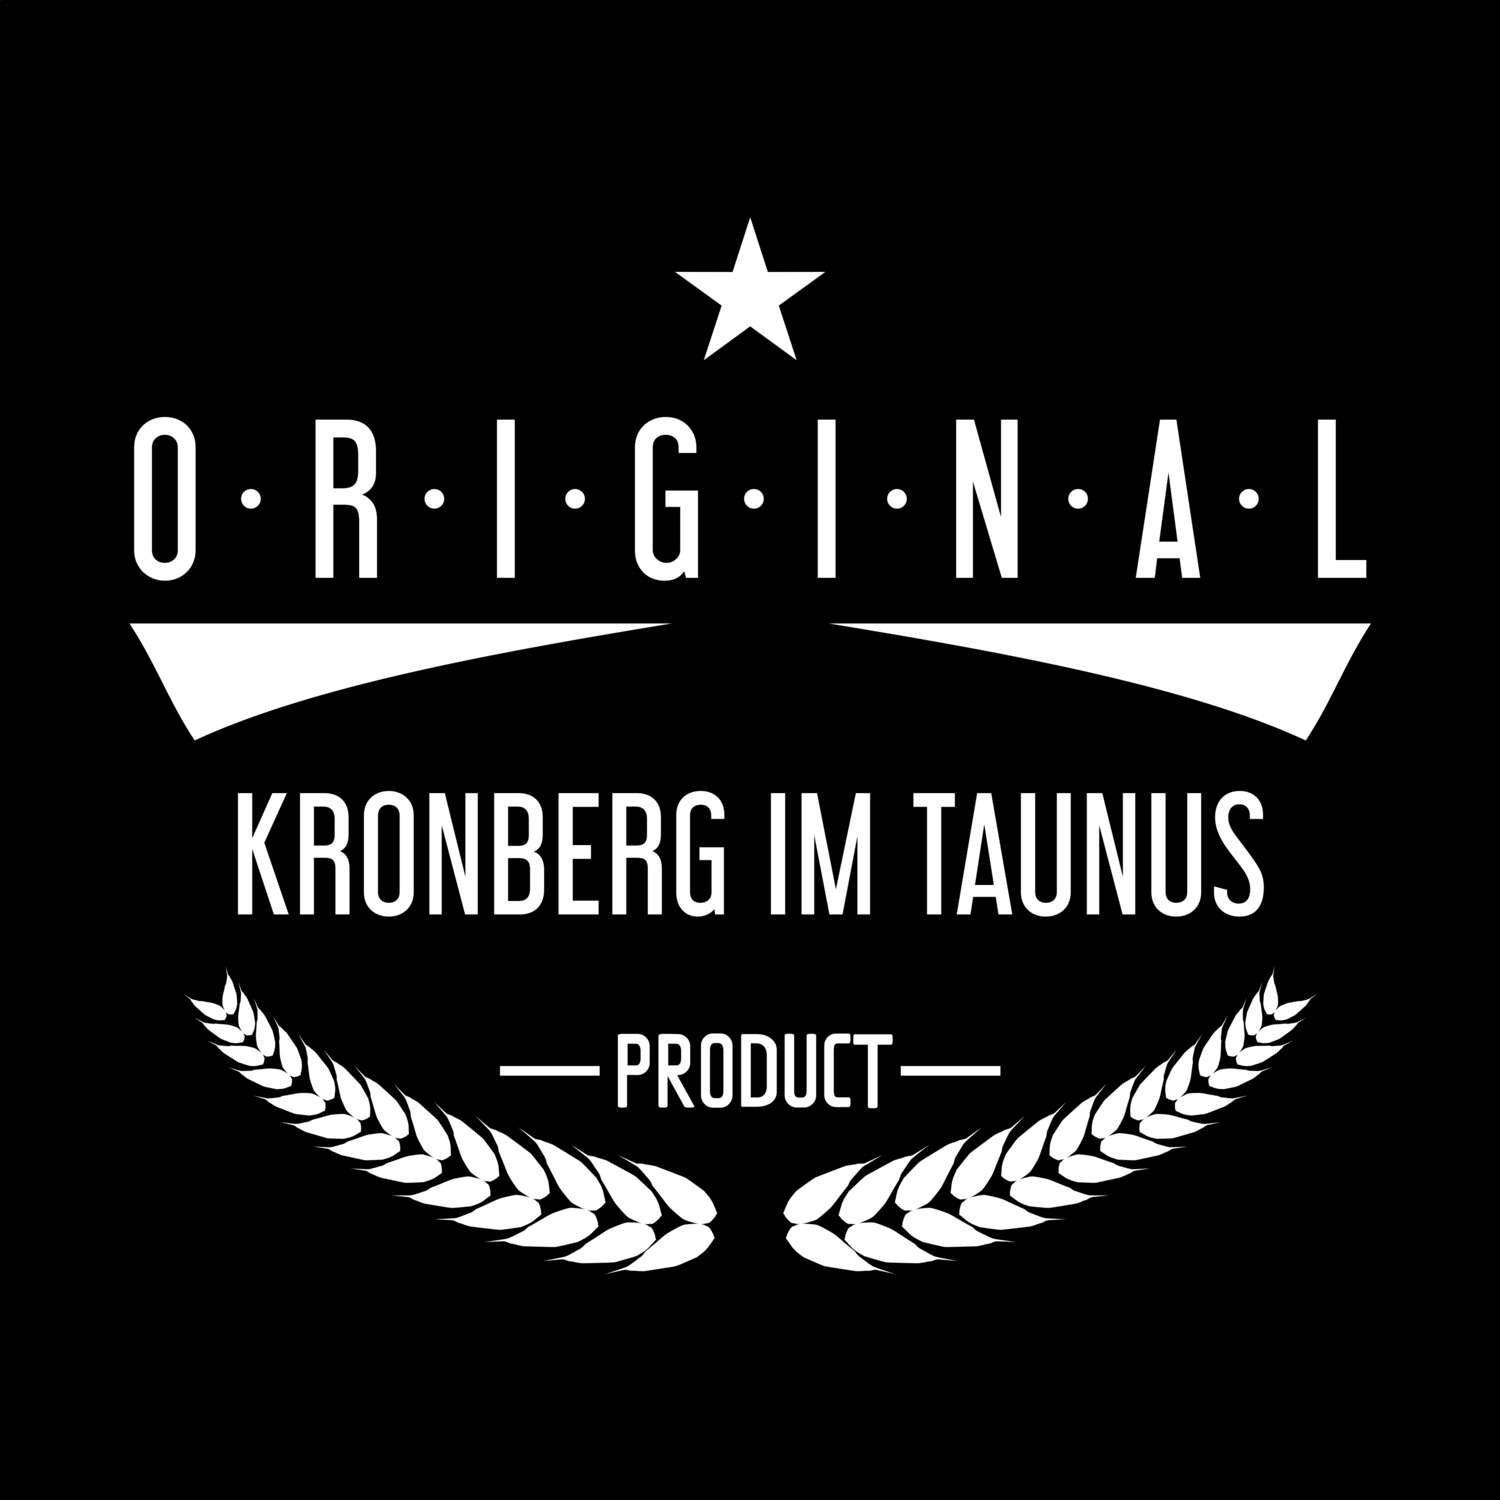 Kronberg im Taunus T-Shirt »Original Product«